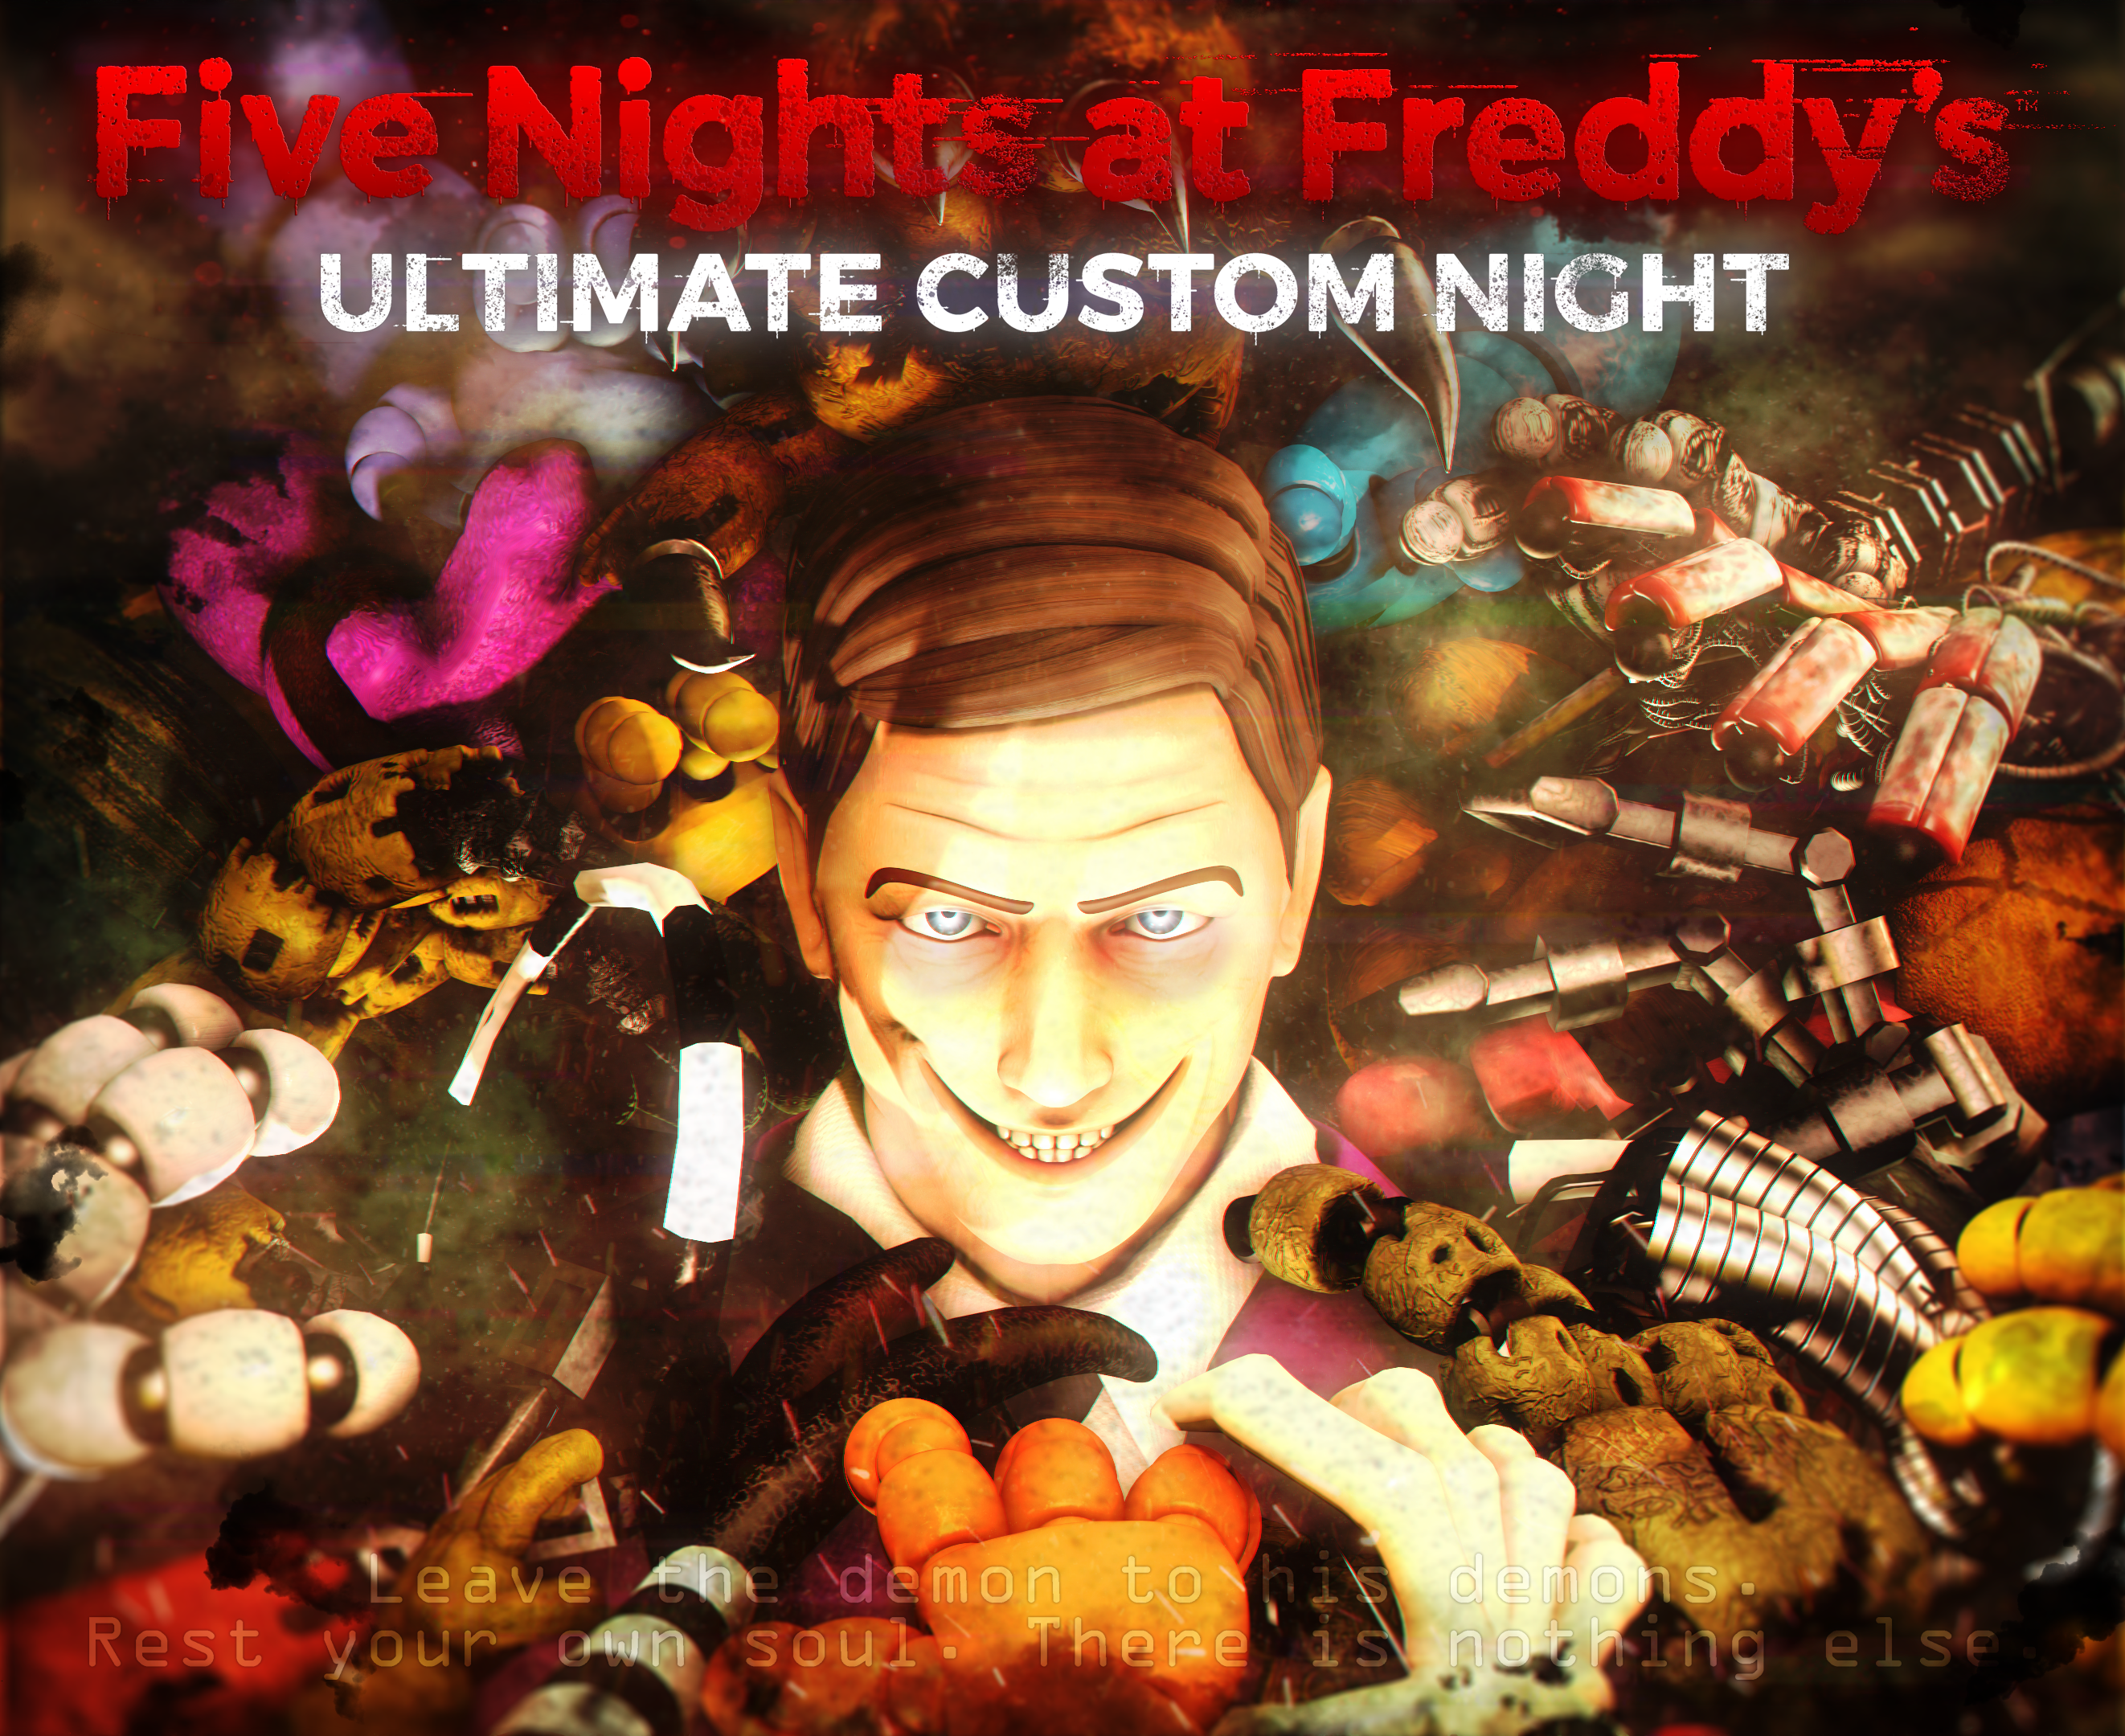 Ultimate Custom Night (3rd Anniversary) by A-006 on DeviantArt